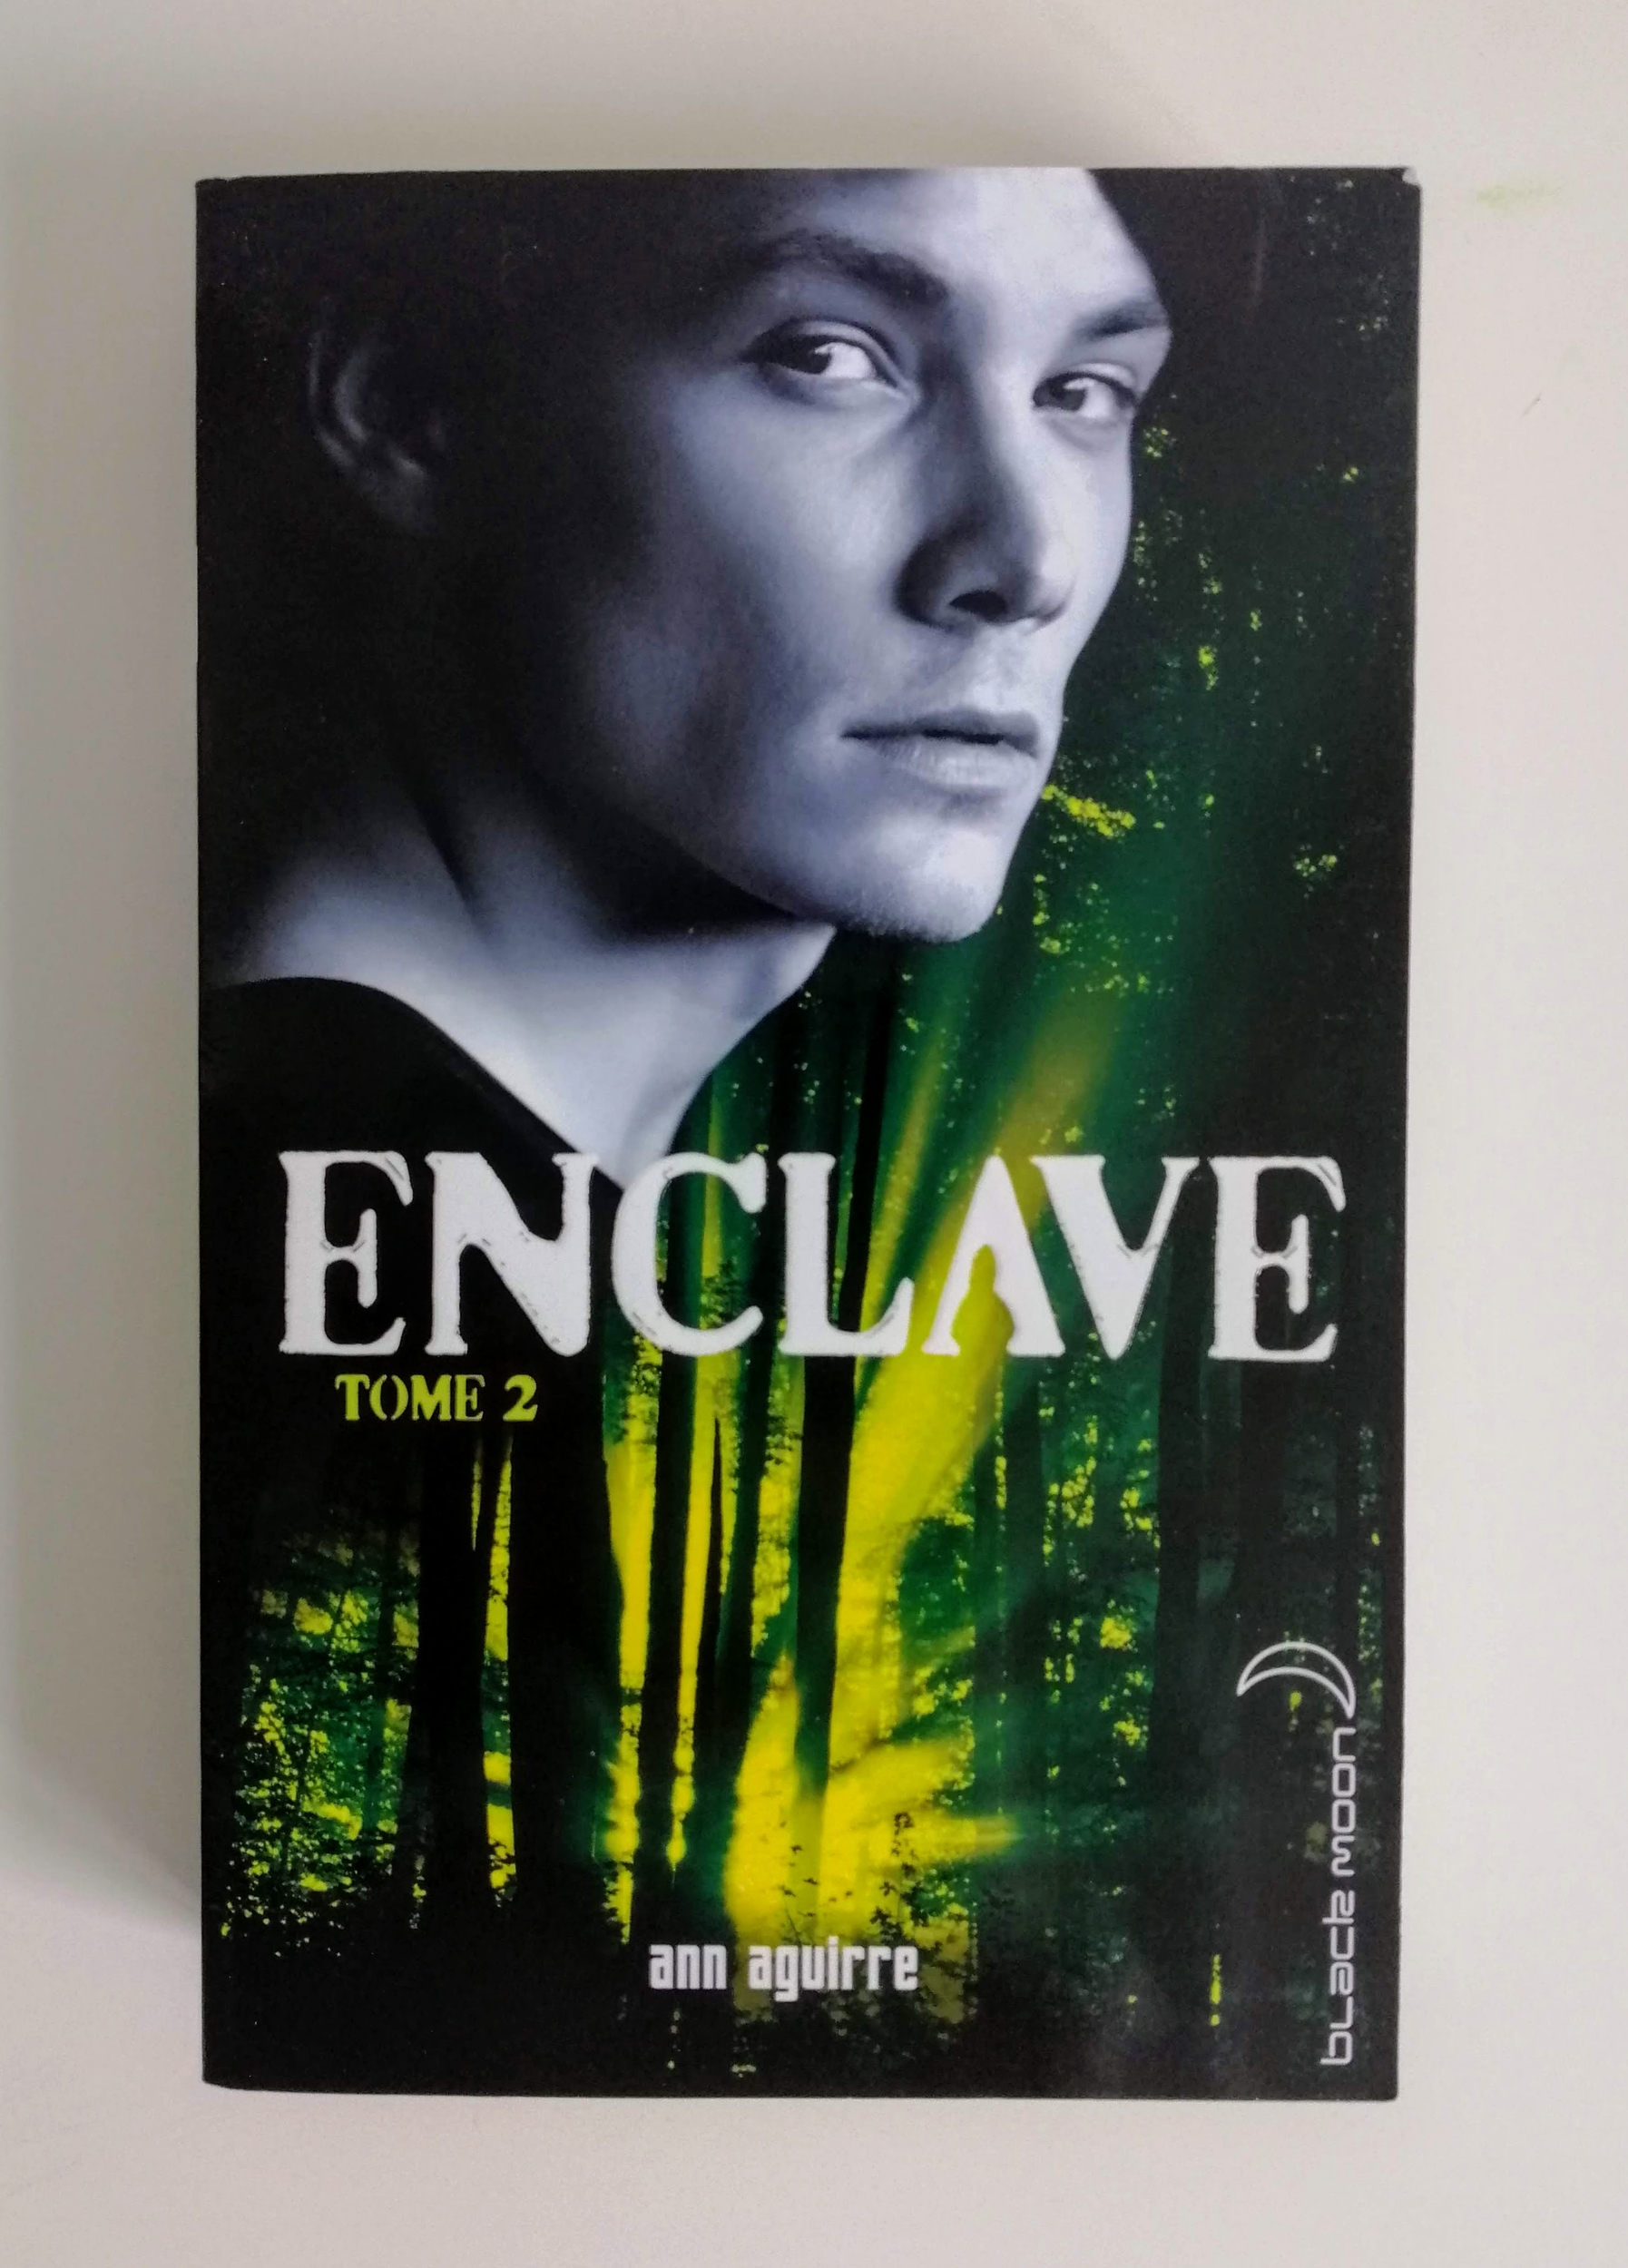 Enclave - Tome 2 (Ann Aguirre)